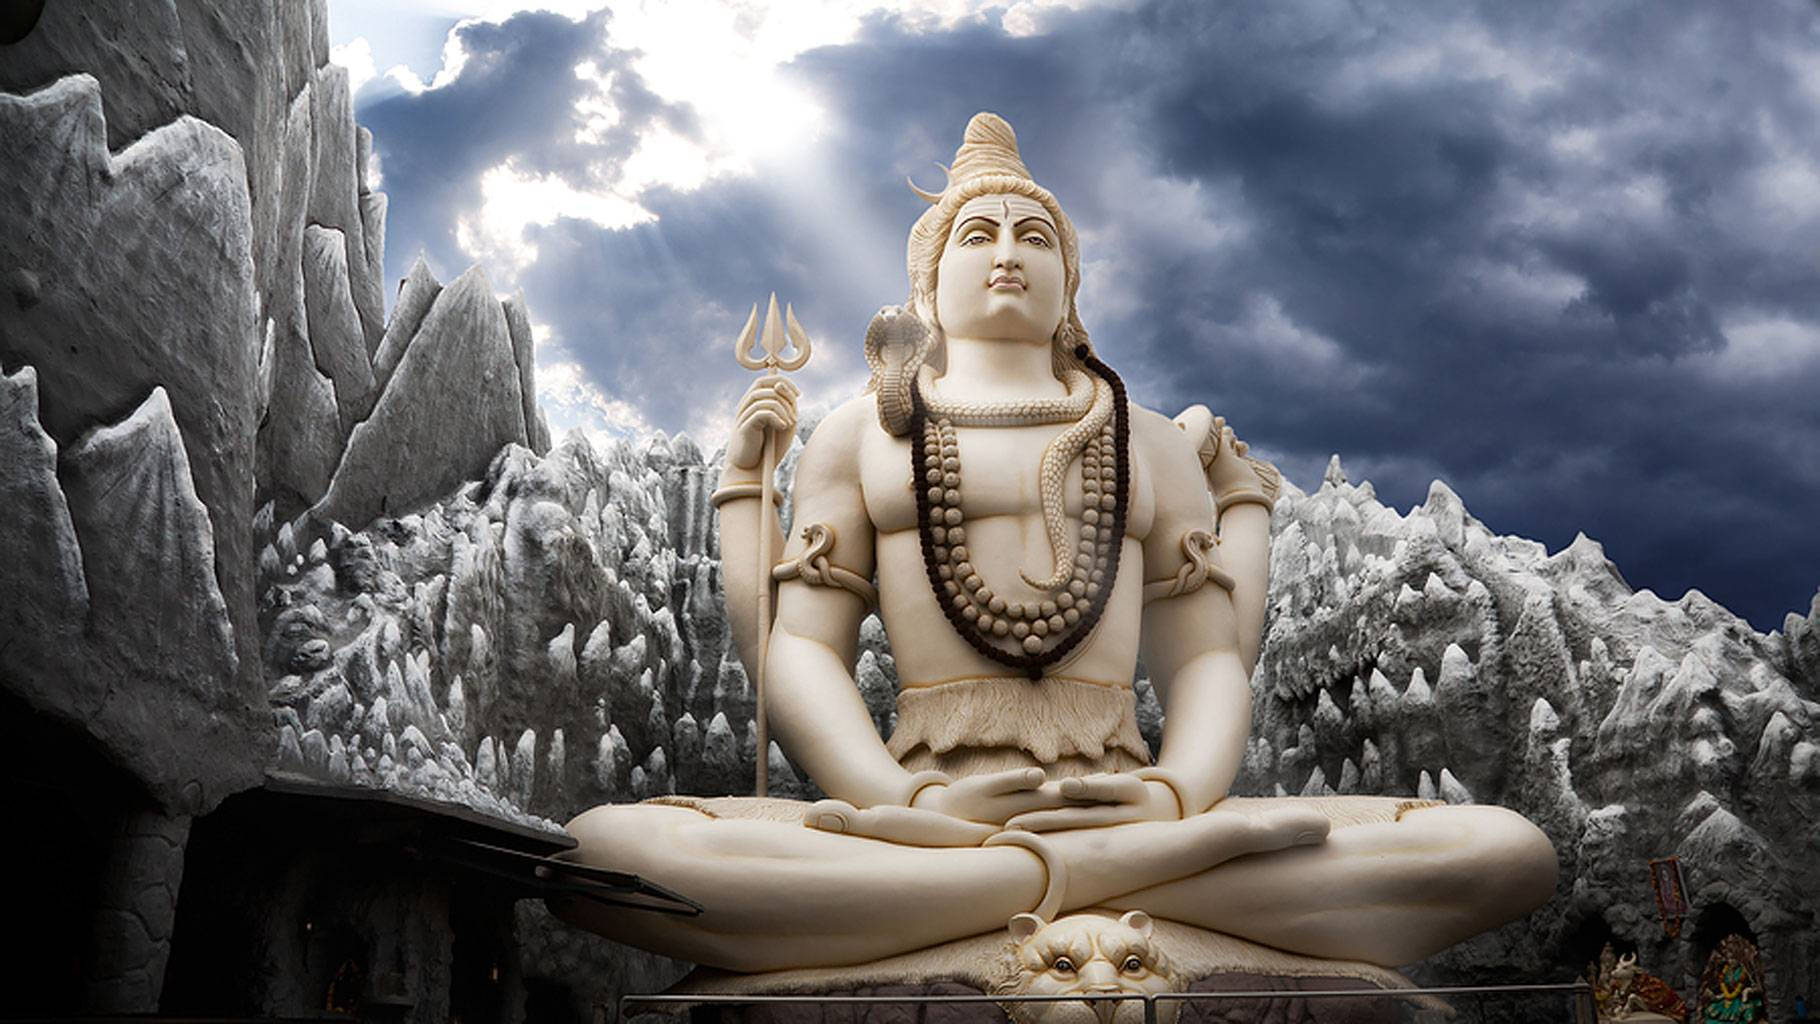 Grand Lord Shiva Sculpture